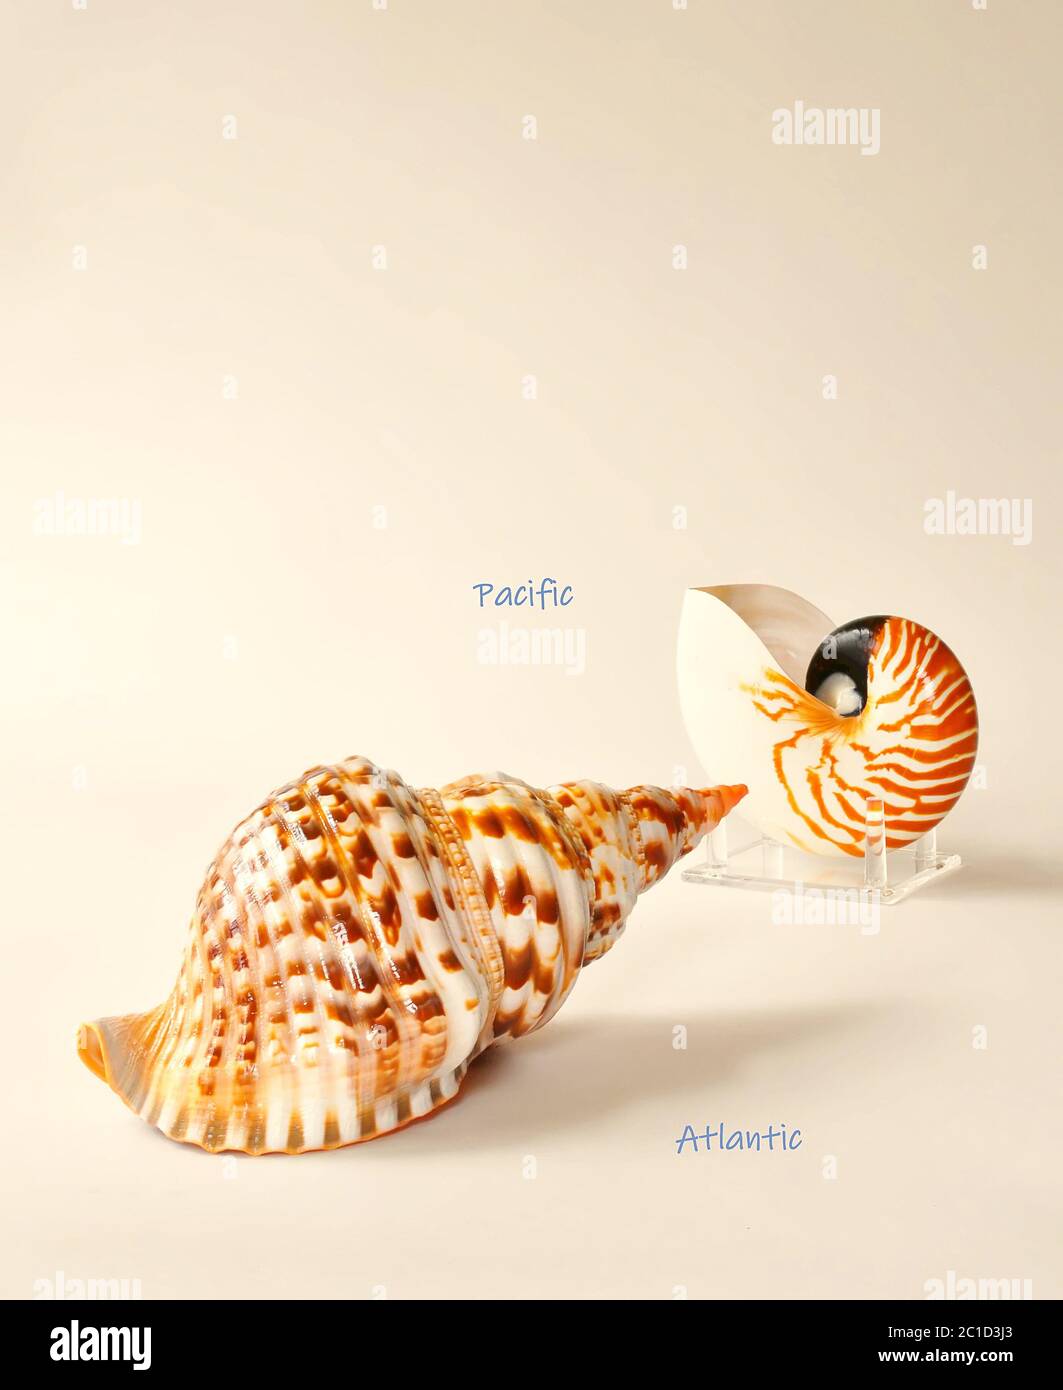 Beach Seashells from Atlantic and Pacific Chambered Nautilus Triton Trumpet Stock Photo